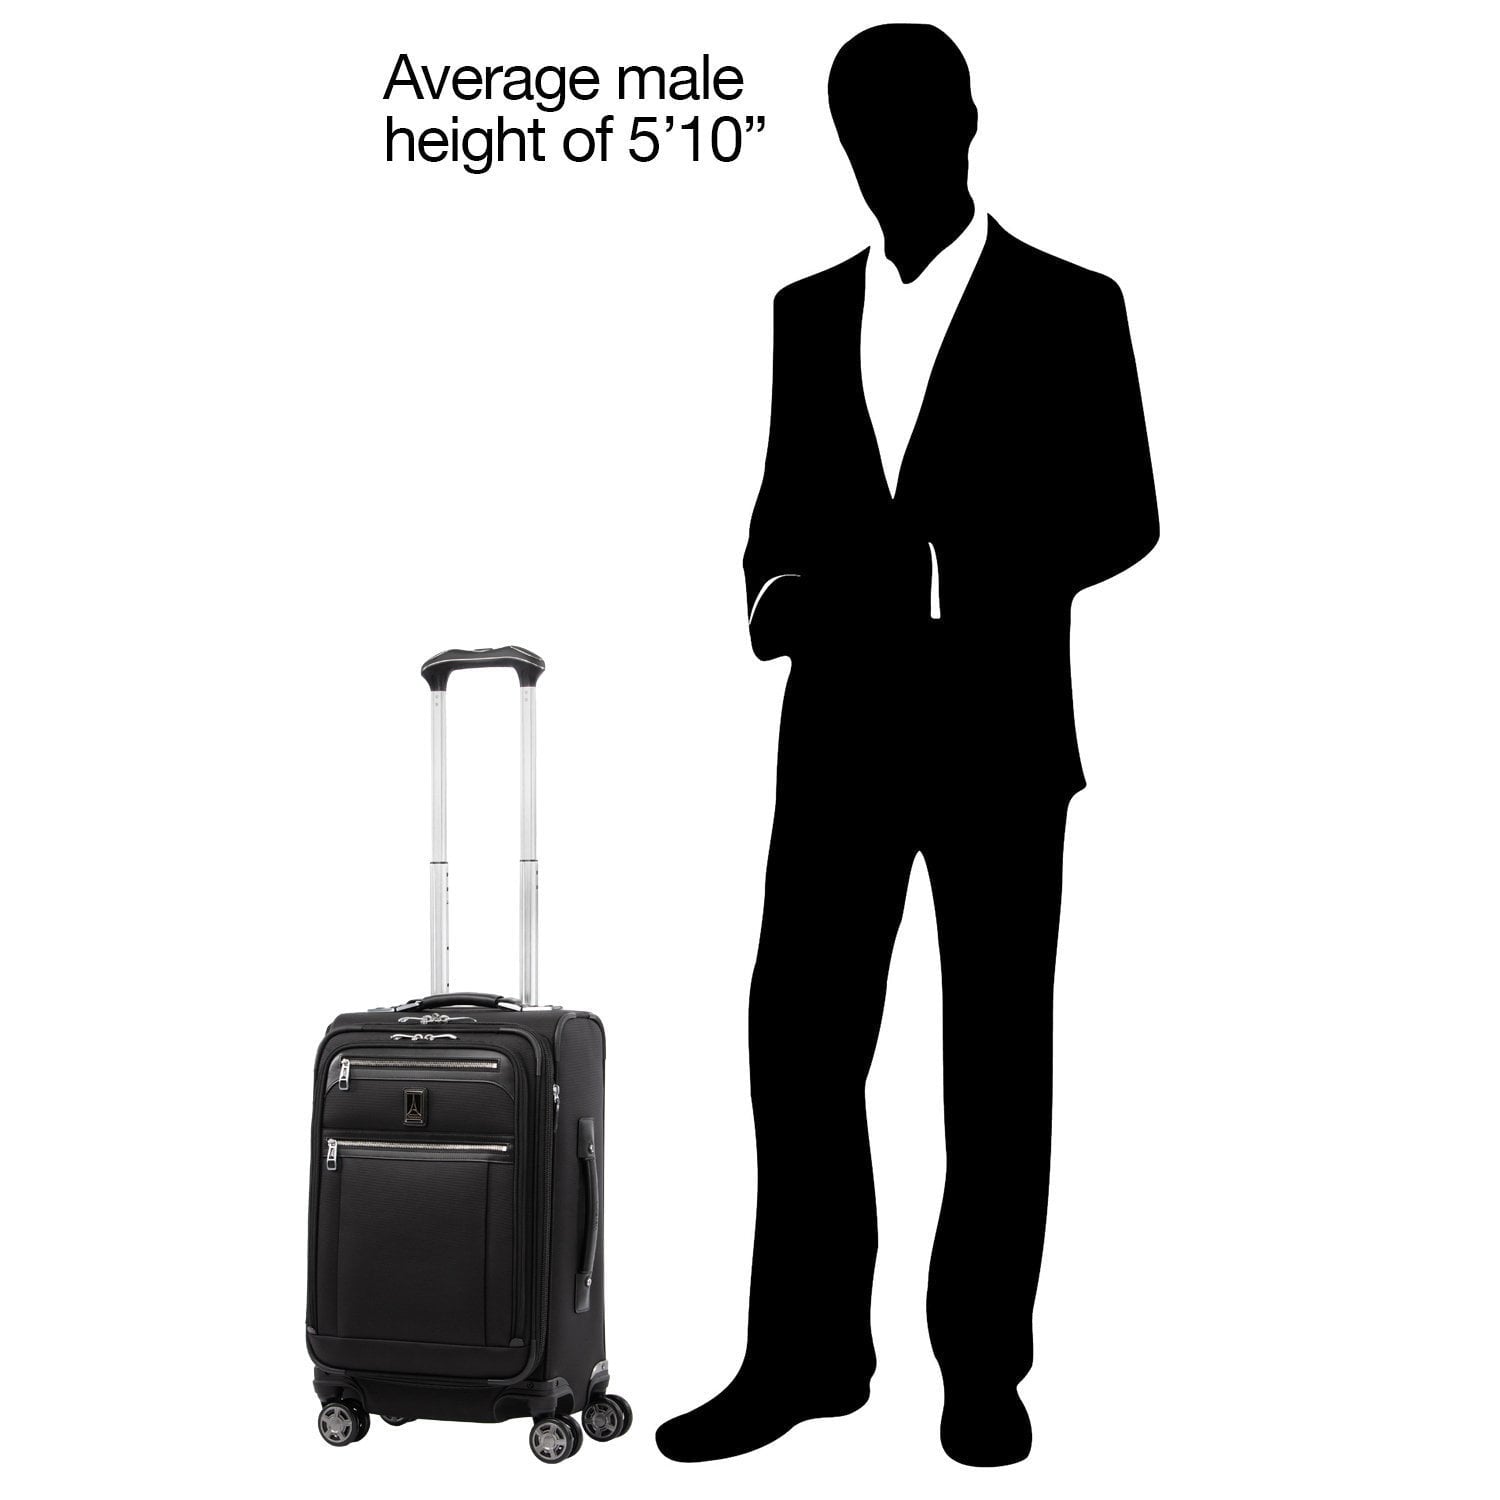 Travelpro Platinum Elite: First Class - Luggage Set